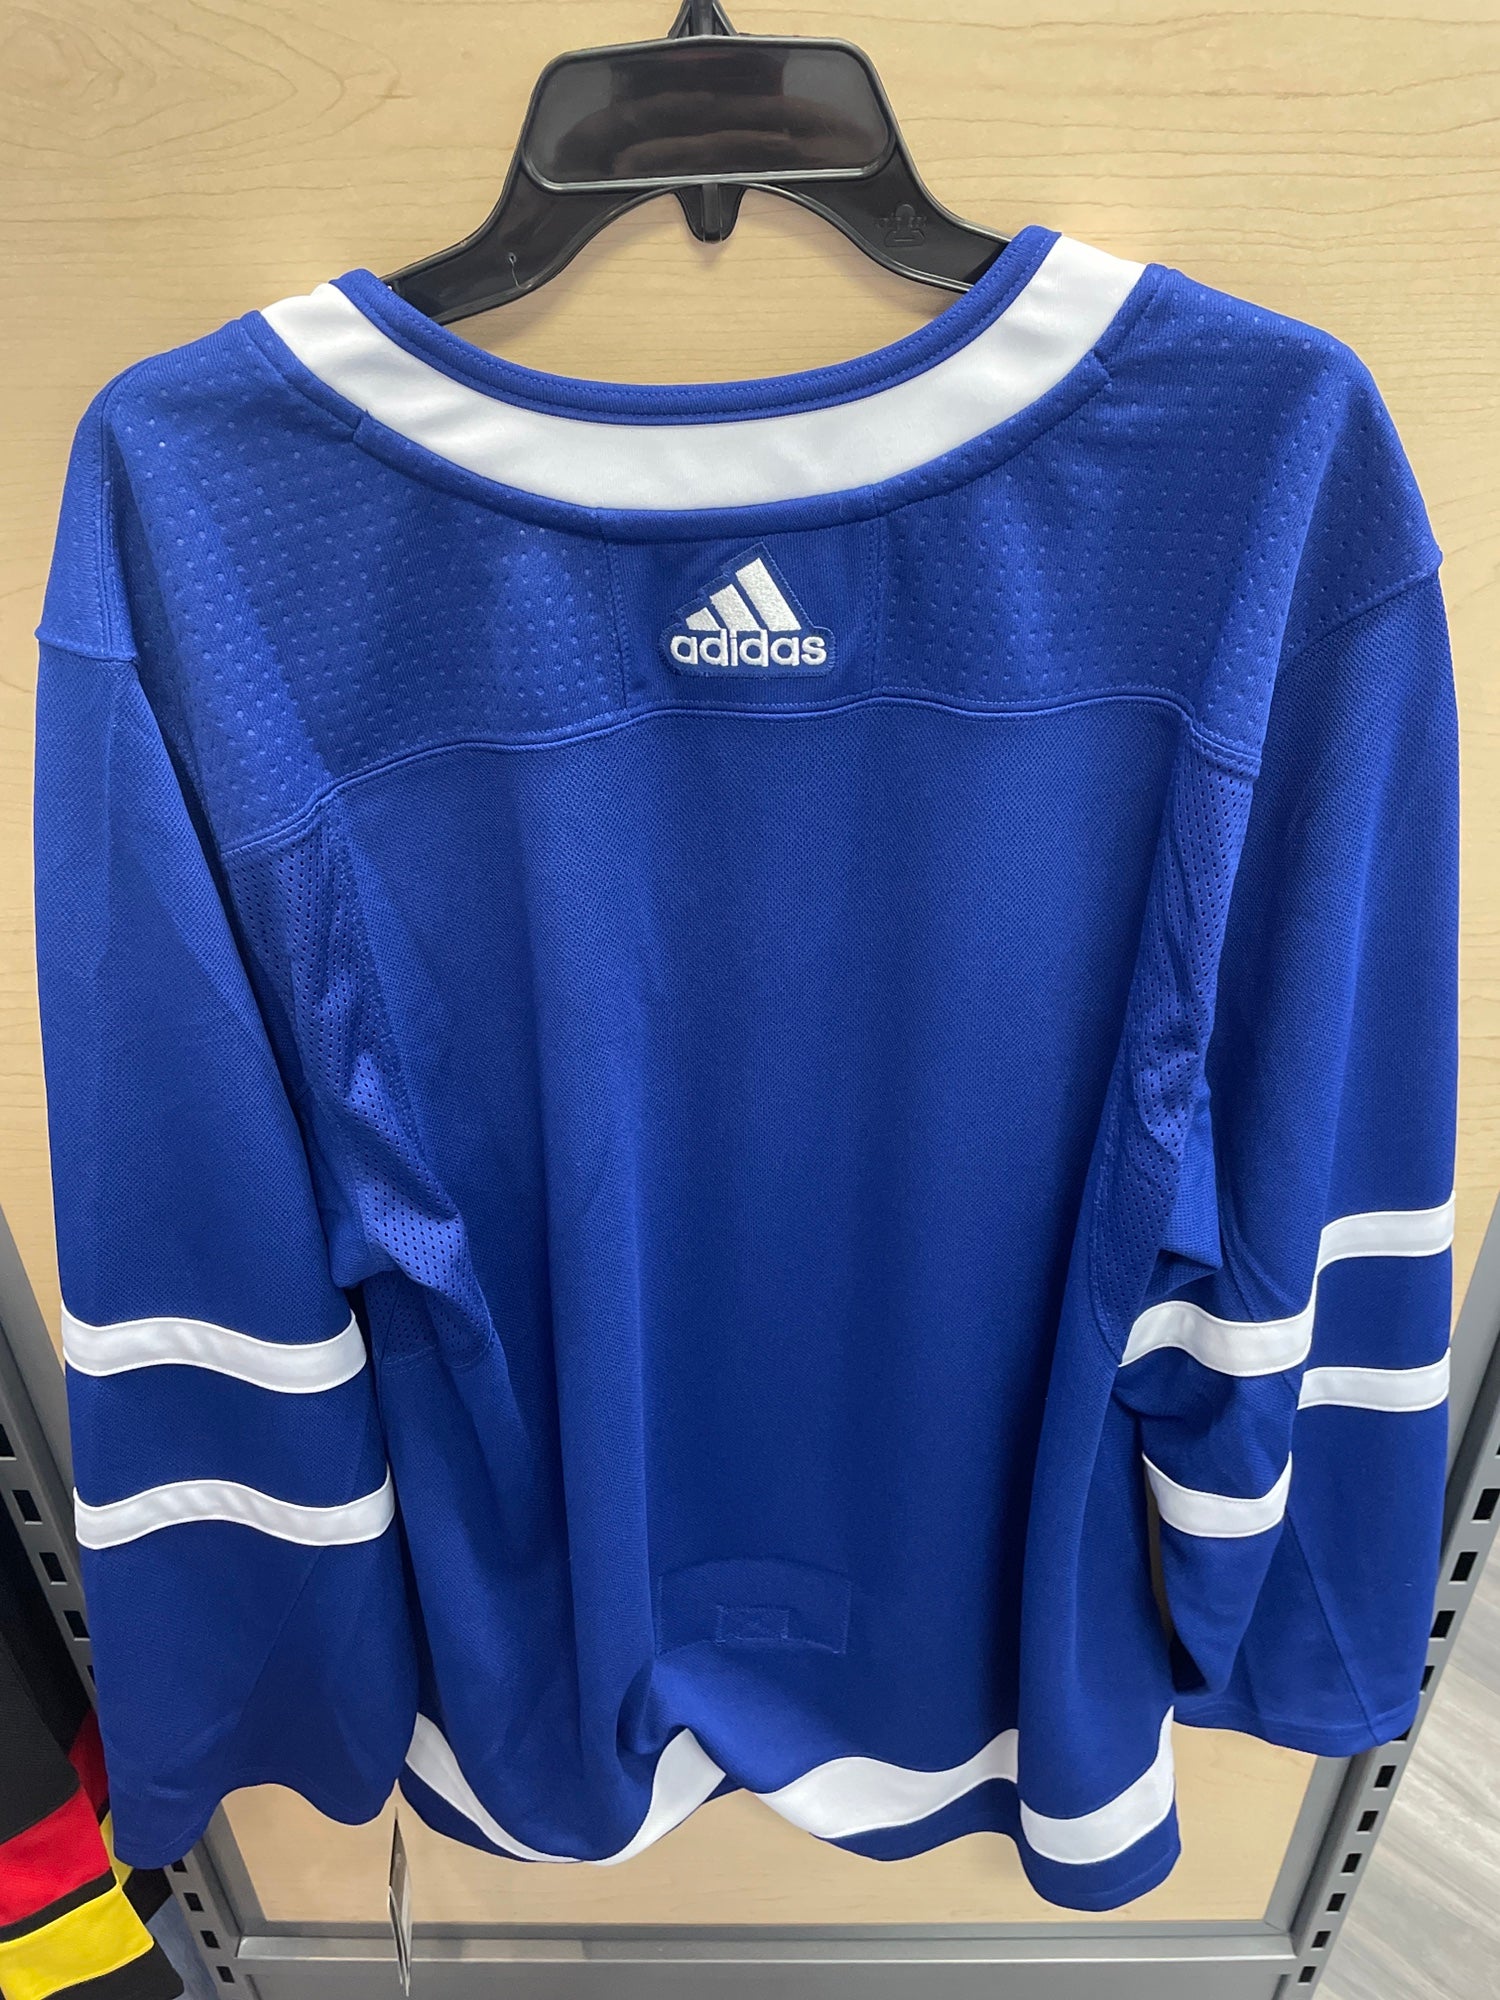 adidas Maple Leafs Vintage Crew Sweatshirt - Grey, Men's Hockey